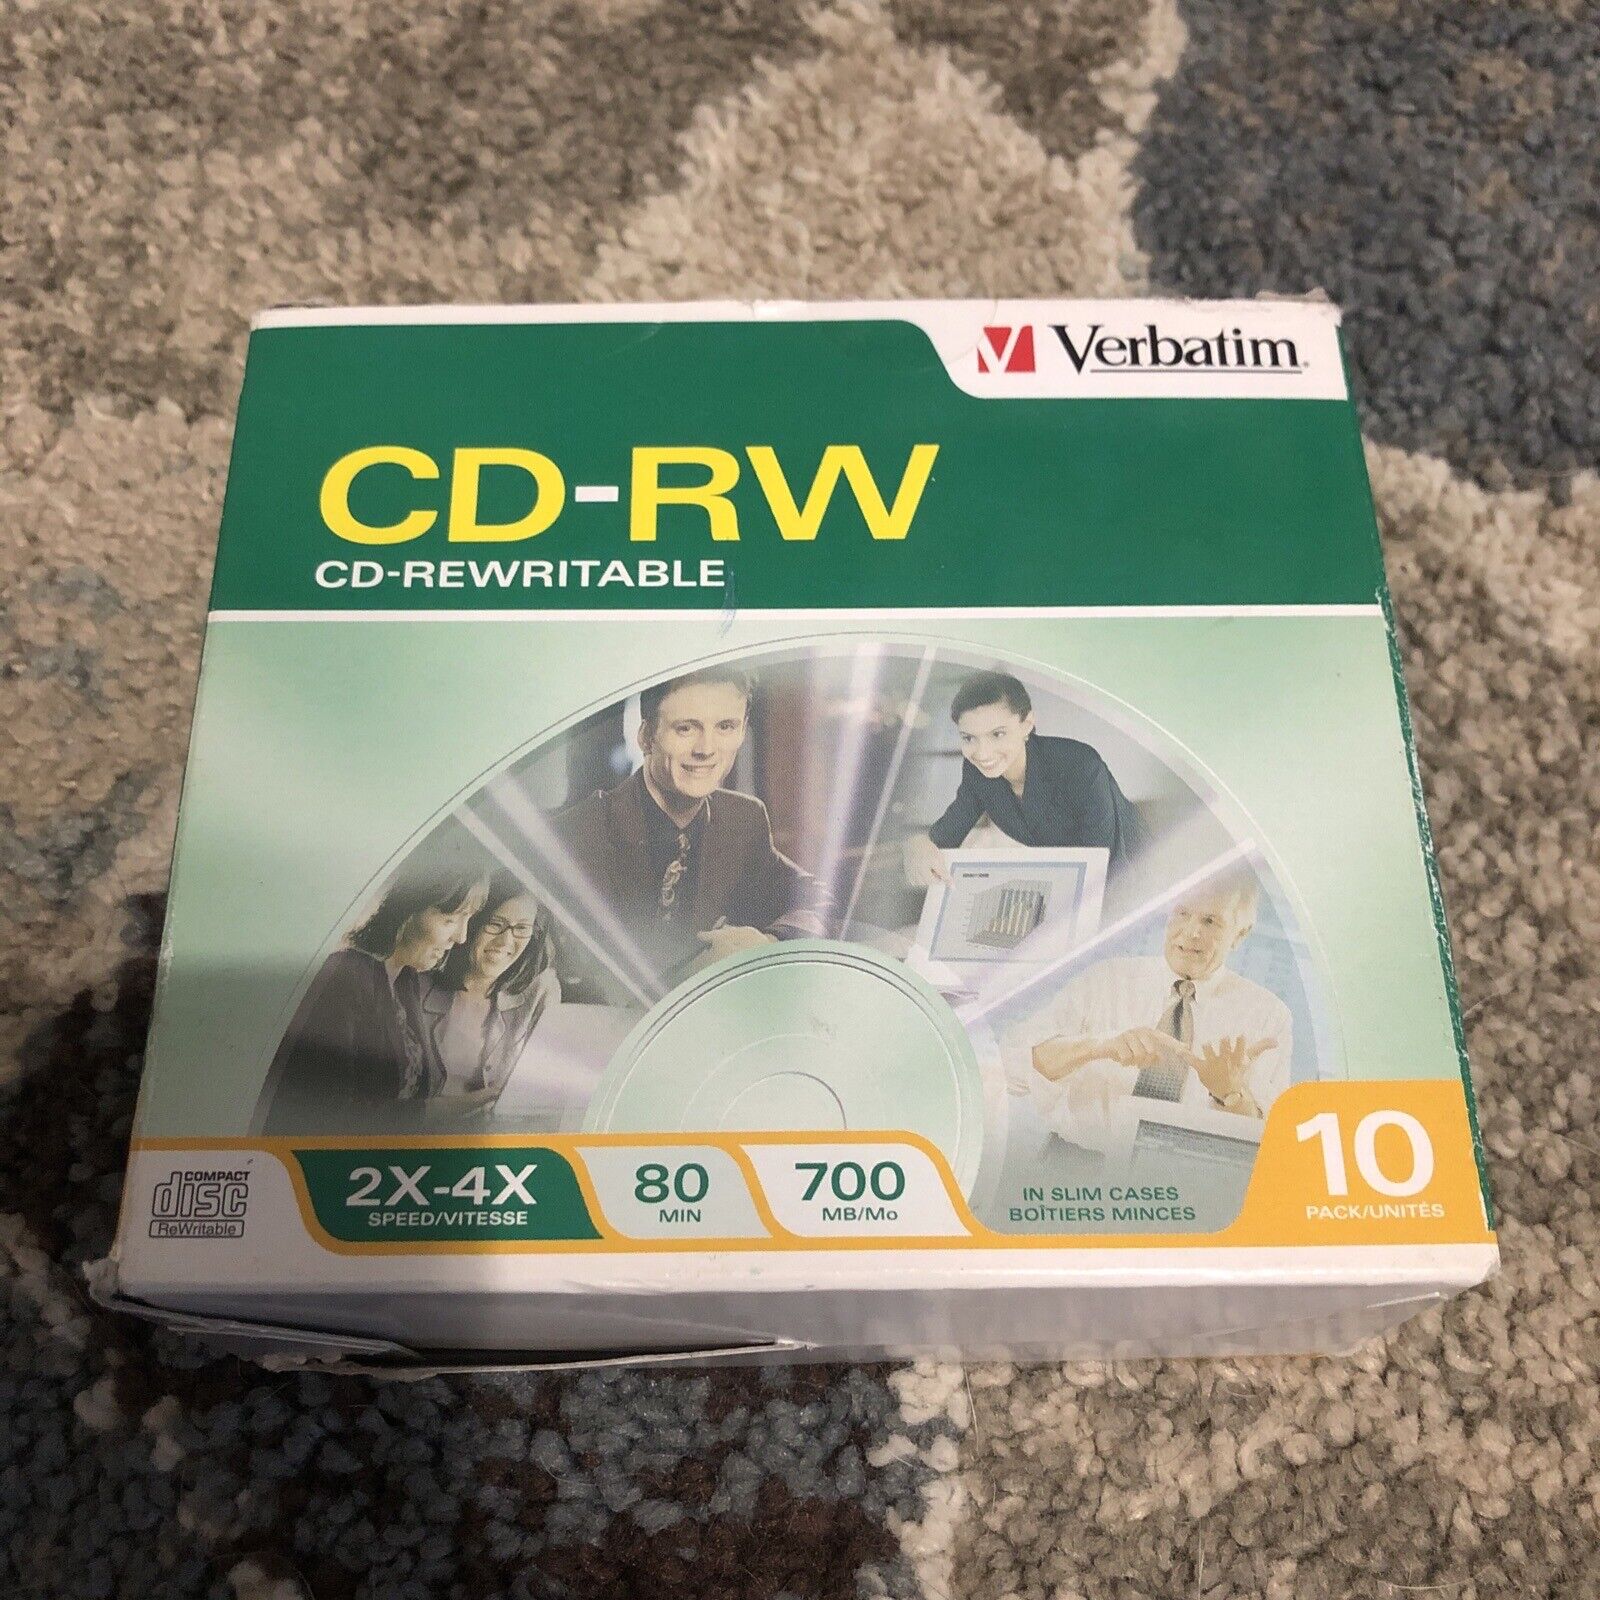 Verbatim CD-RW (2X-4X) 700MB 80-Mins Recordable Discs Music/Data Discs Sealed